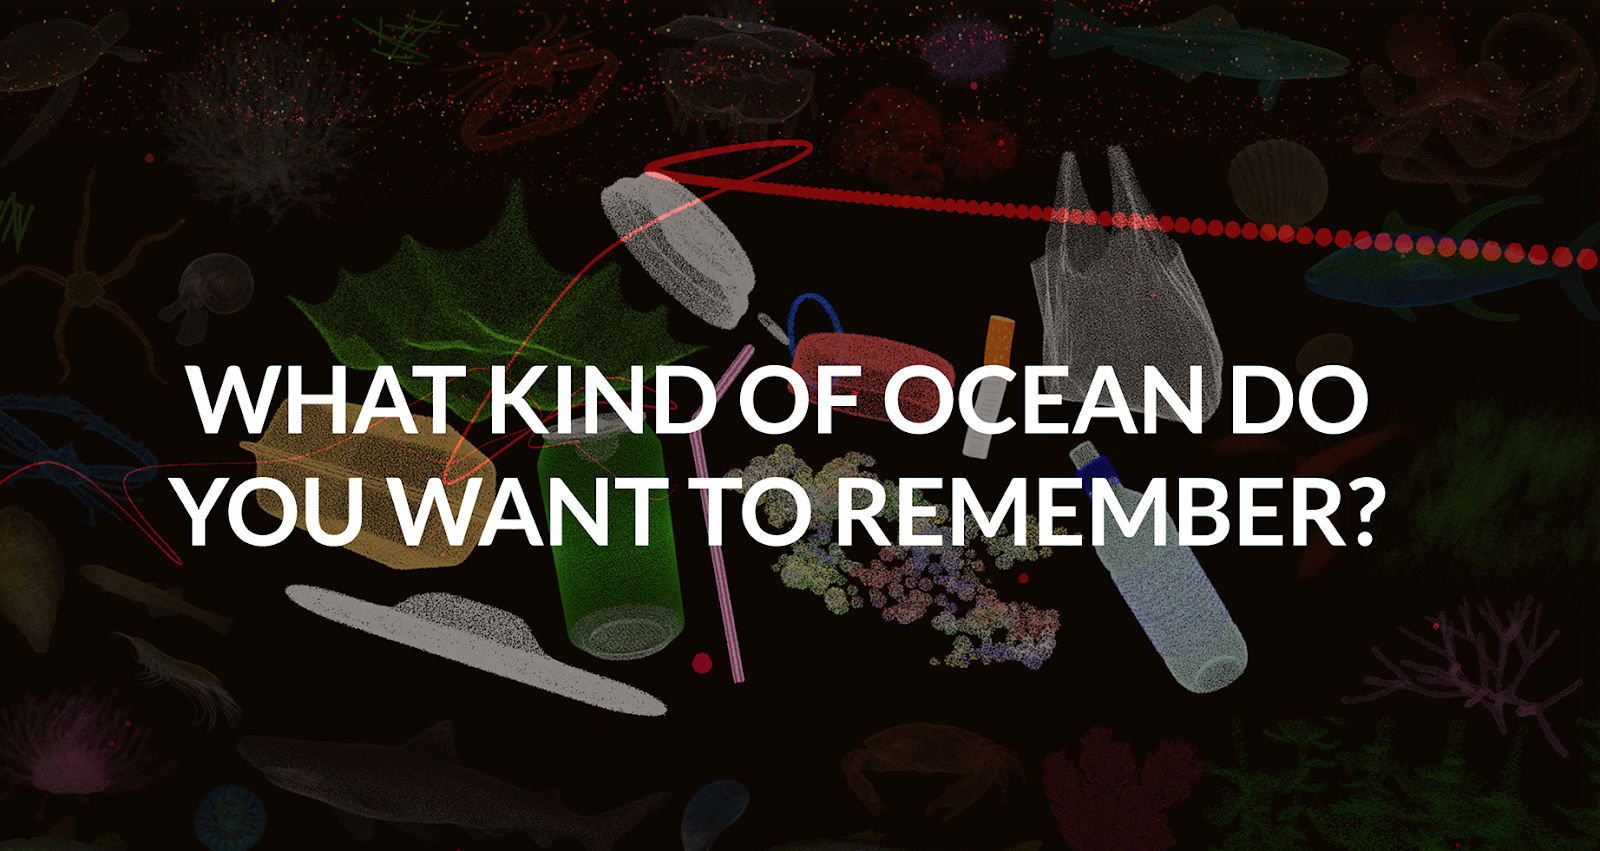 Illustration, die den Schriftzug "What Kind of ocean do you want to remember" zeigt